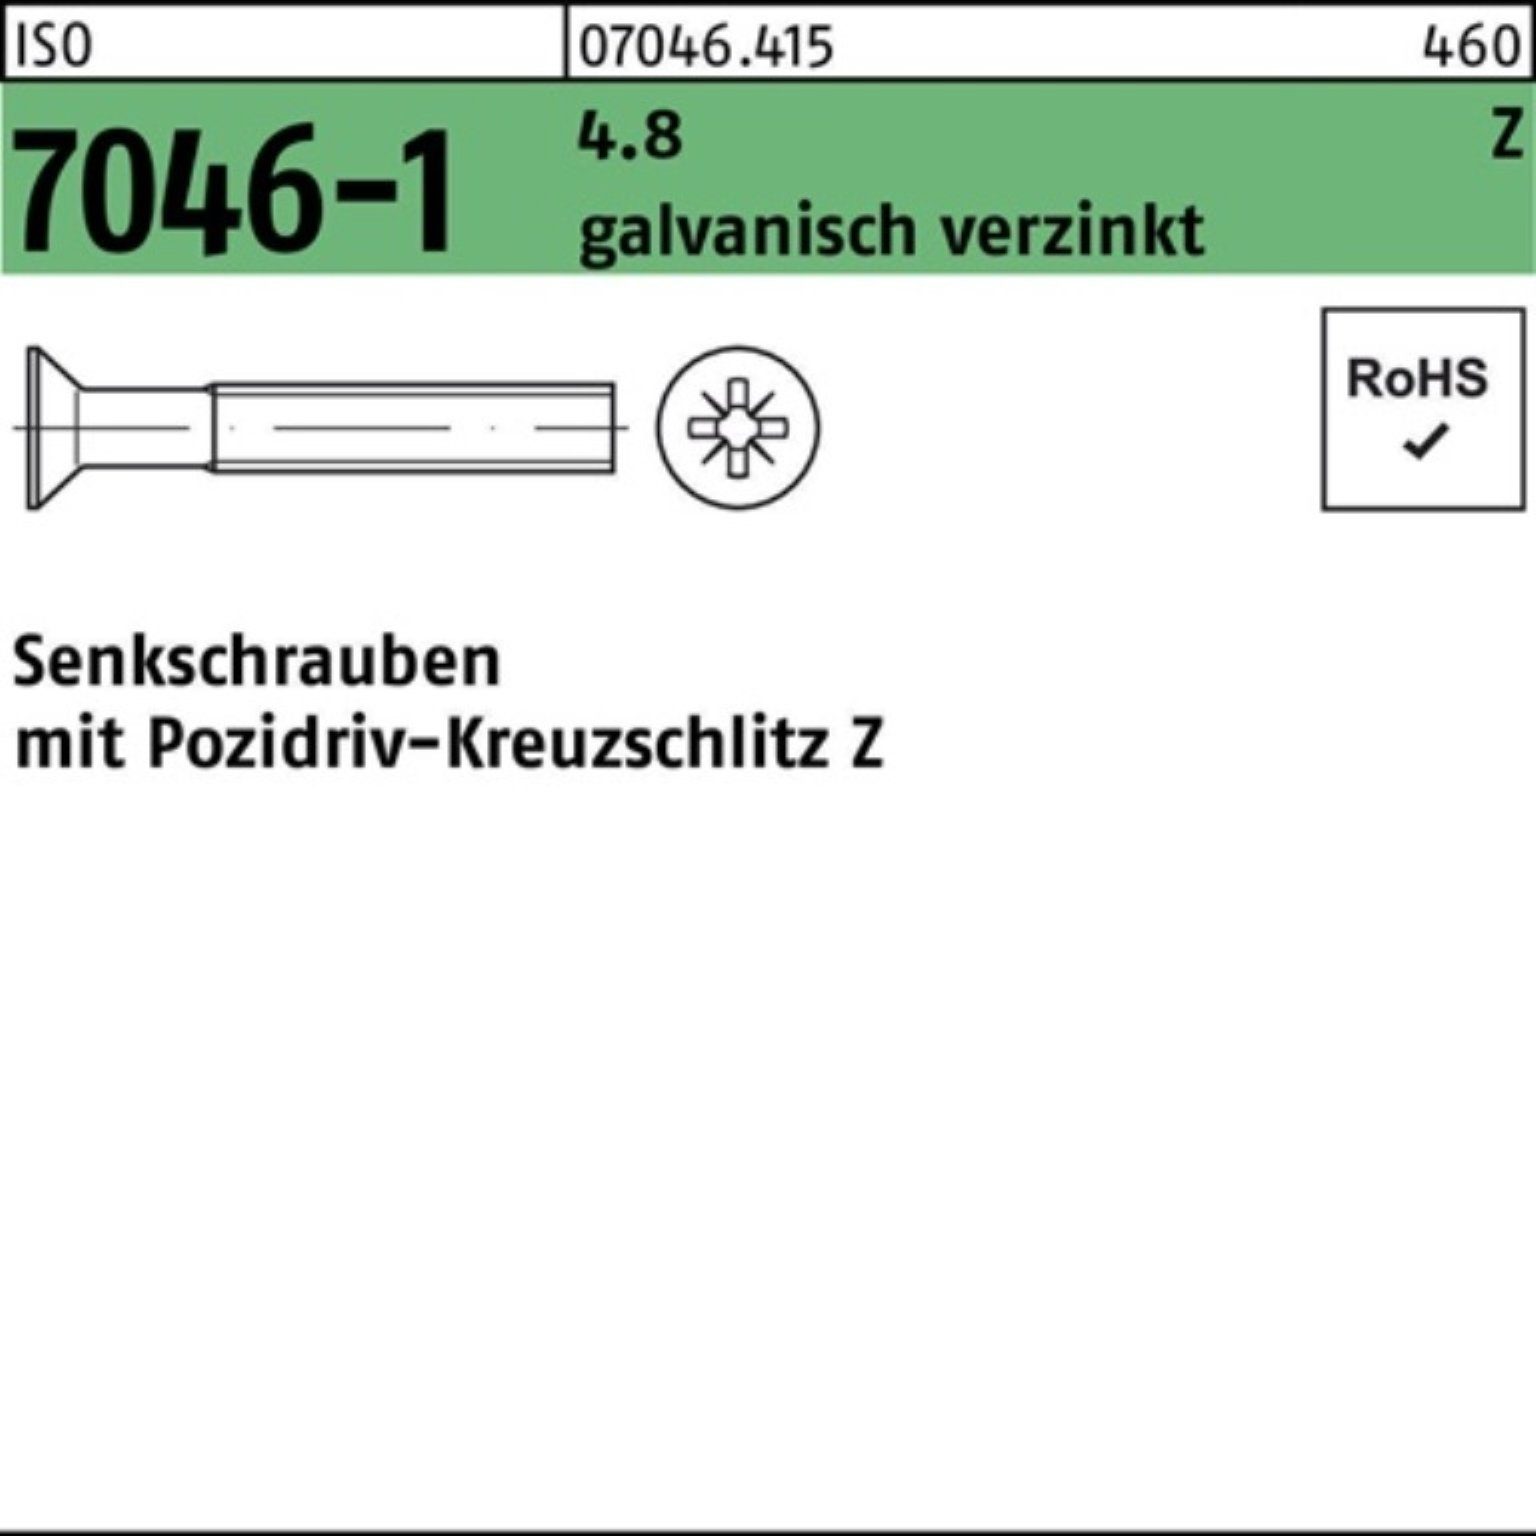 Reyher Senkschraube 1000er Senkschraube Pack 1000St. 7046-1 4.8 M6x10-Z PZ ISO galv.verz